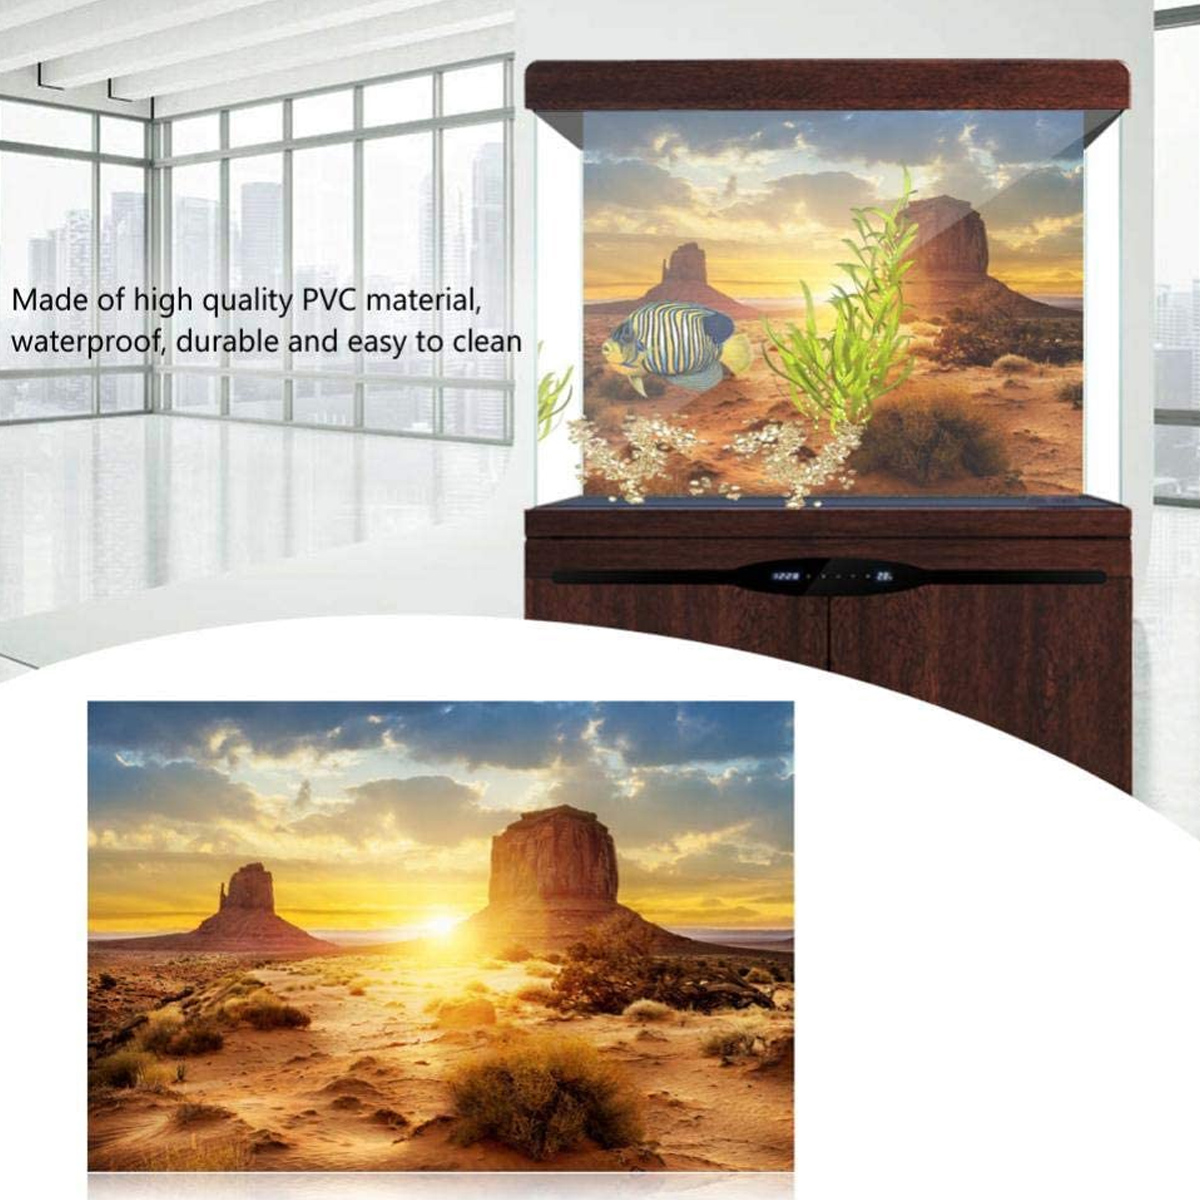 Sun-Desert-Adhesive-Poster-Aquarium-Fish-Tank-Background-Sticker-Home-Office-Decor-1749093-2